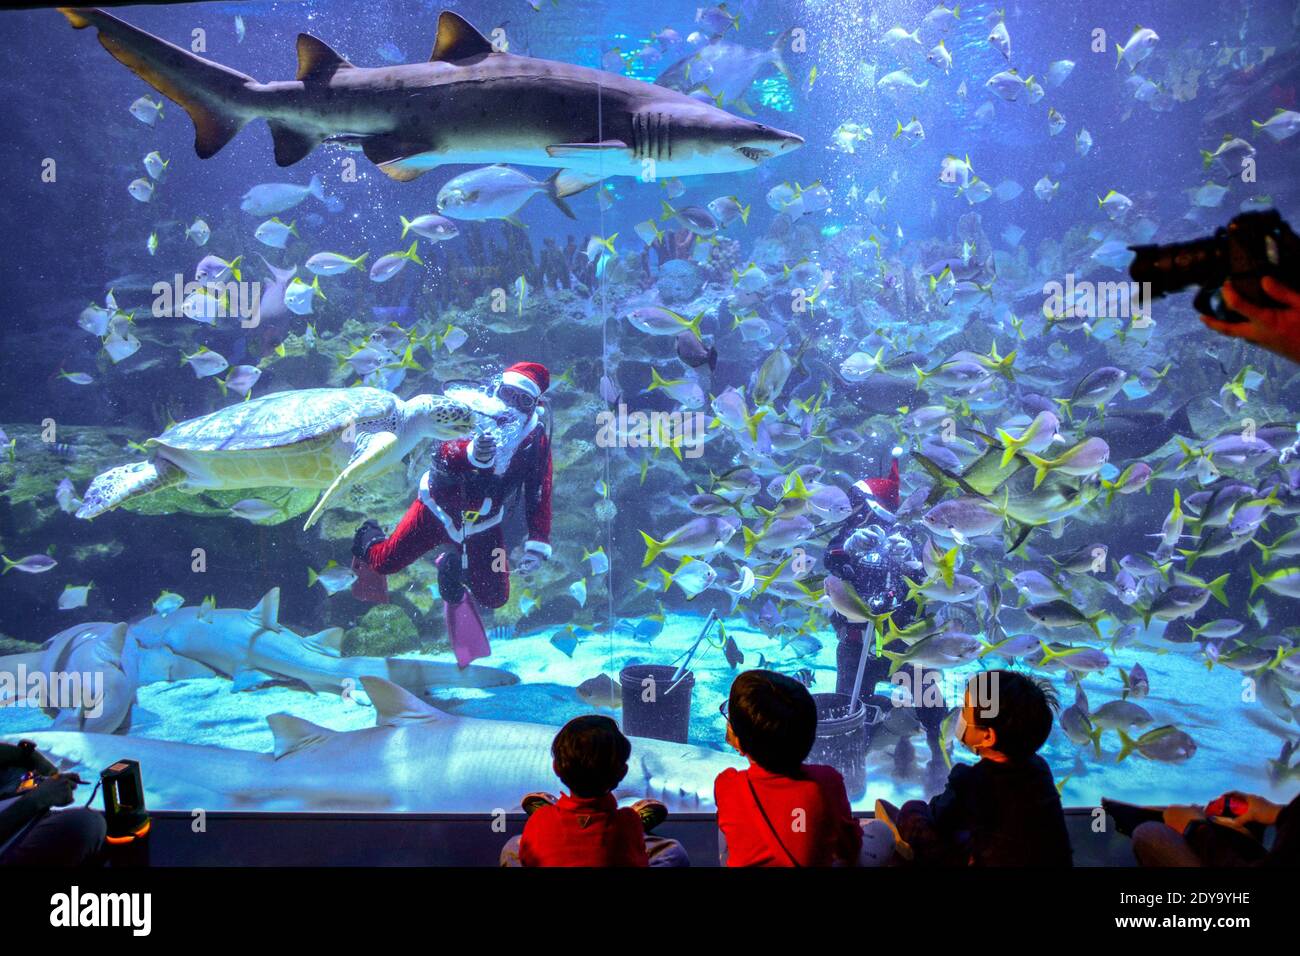 Beijing, Malaysia. 23rd Dec, 2020. A scuba diver dressed as Santa Claus feeds a turtle during a performance at Aquaria KLCC aquarium in Kuala Lumpur, Malaysia, Dec. 23, 2020. Credit: Chong Voon Chung/Xinhua/Alamy Live News Stock Photo